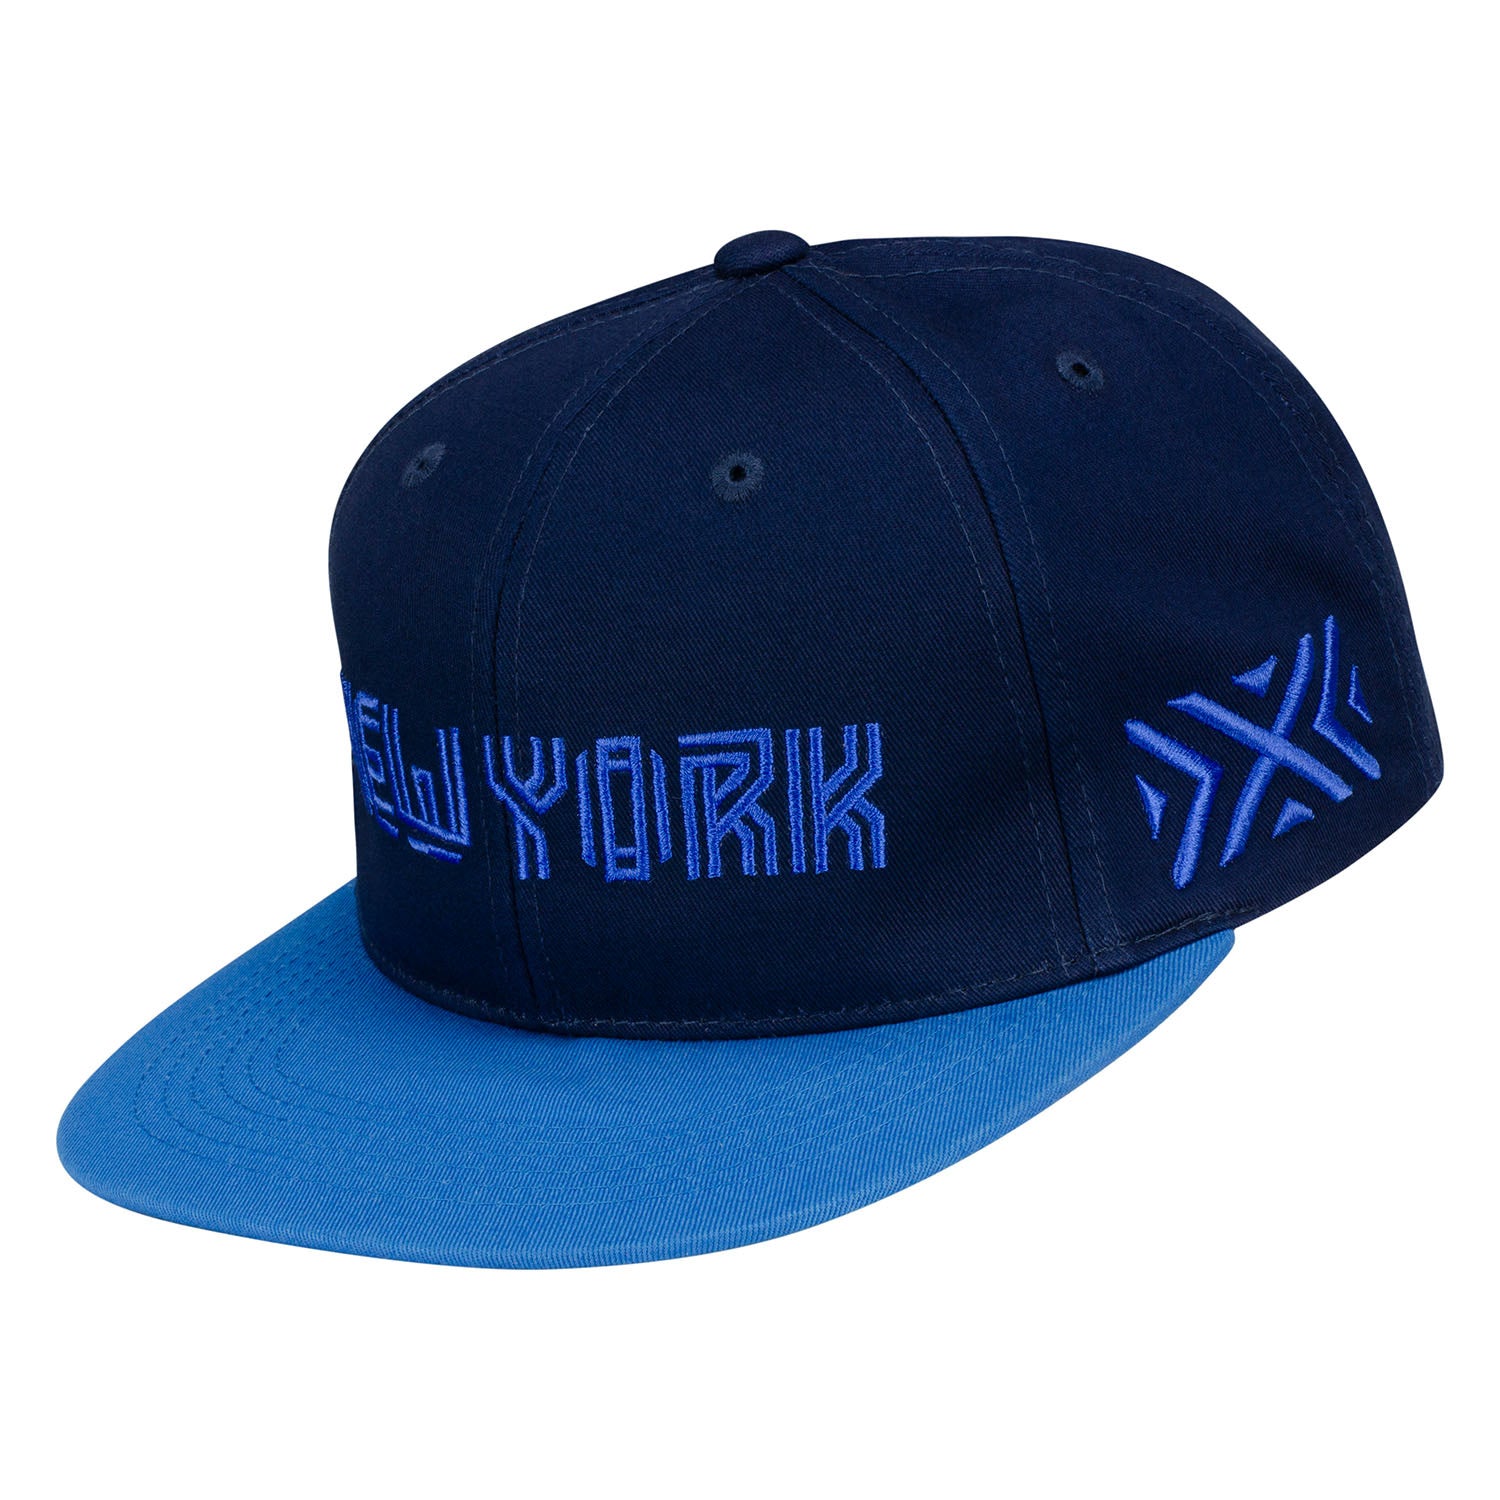 New York Excelsior Blue Snapback Hat - Left View